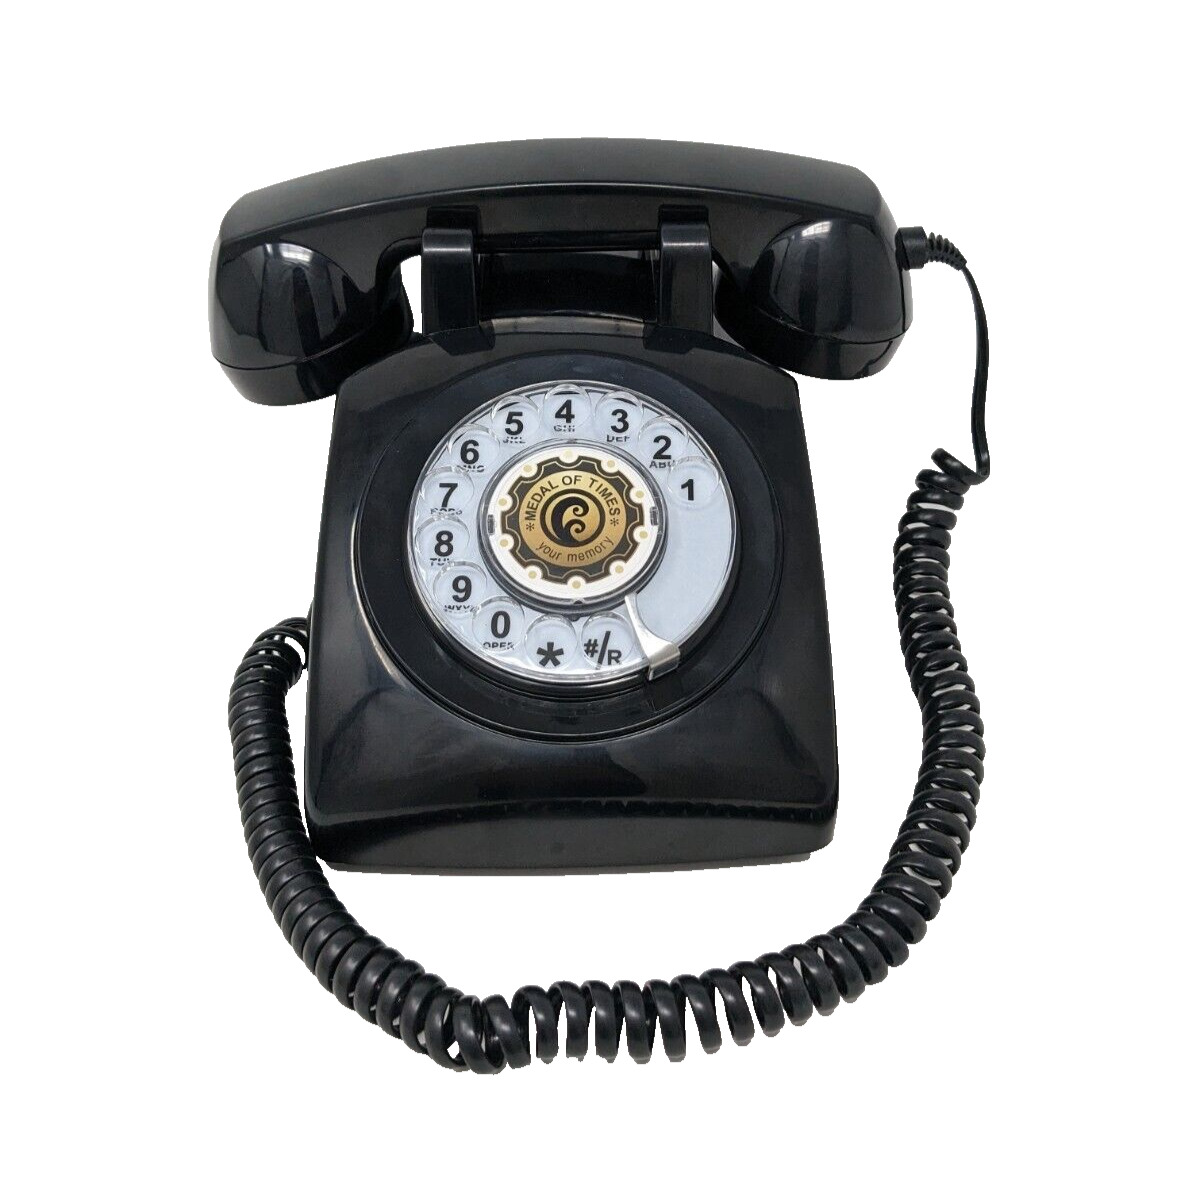 Retro style Rotary Dial Phone 1960 Vintage Landline Telephone Old Fashioned